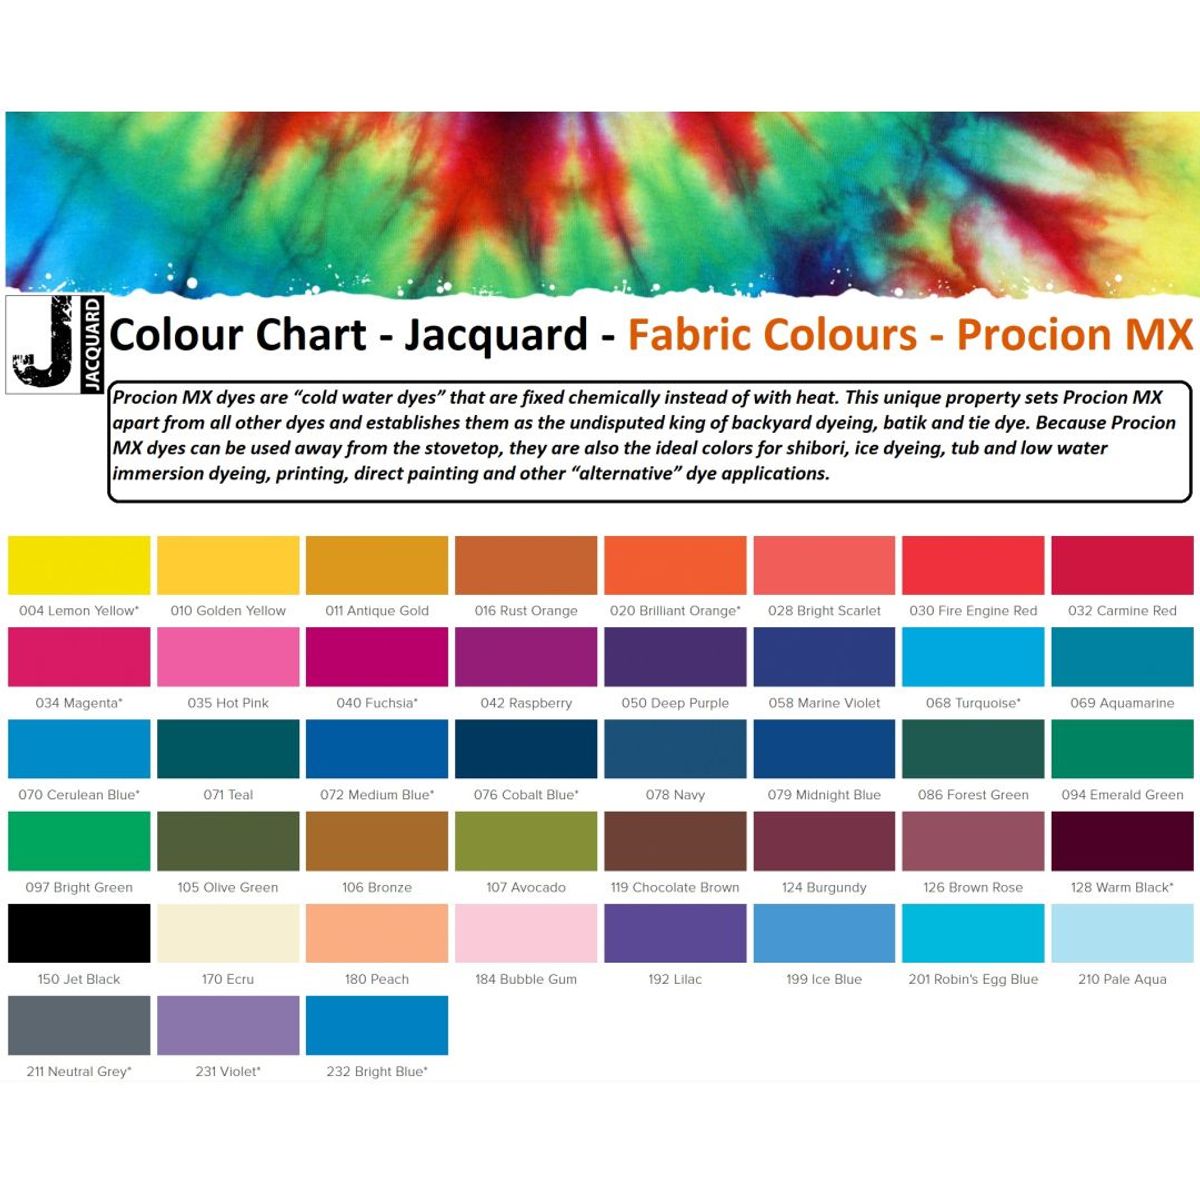 Jacquard - Procion MX Dye - Fabric Textile - Warm Black 128